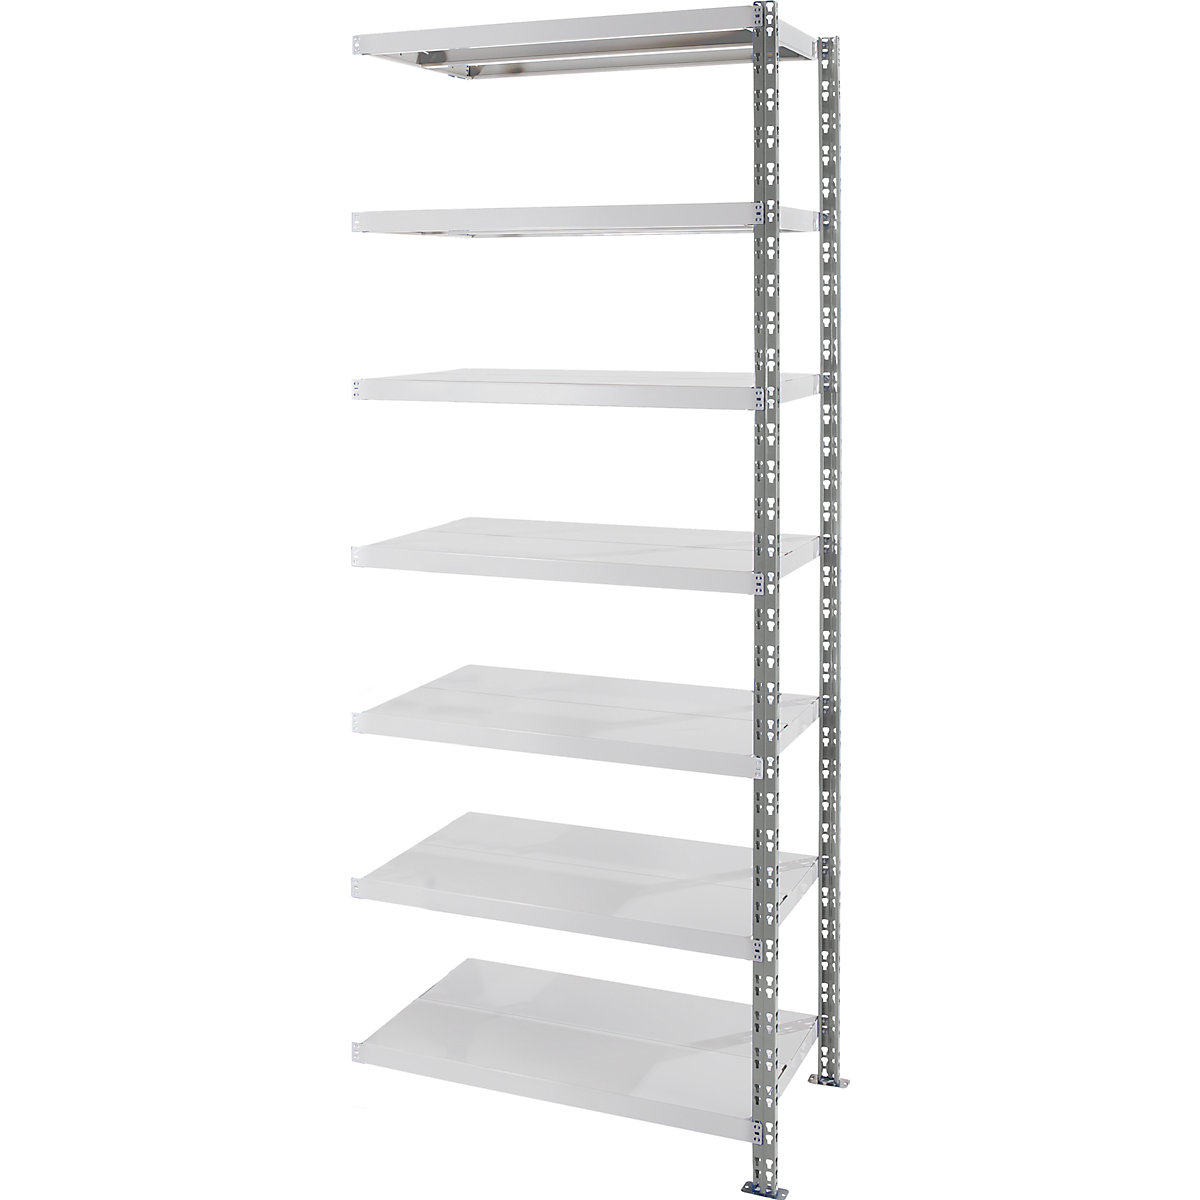 Universal boltless shelving unit, sheet steel shelves, HxWxD 2522 x 1025 x 400 mm, extension shelf unit